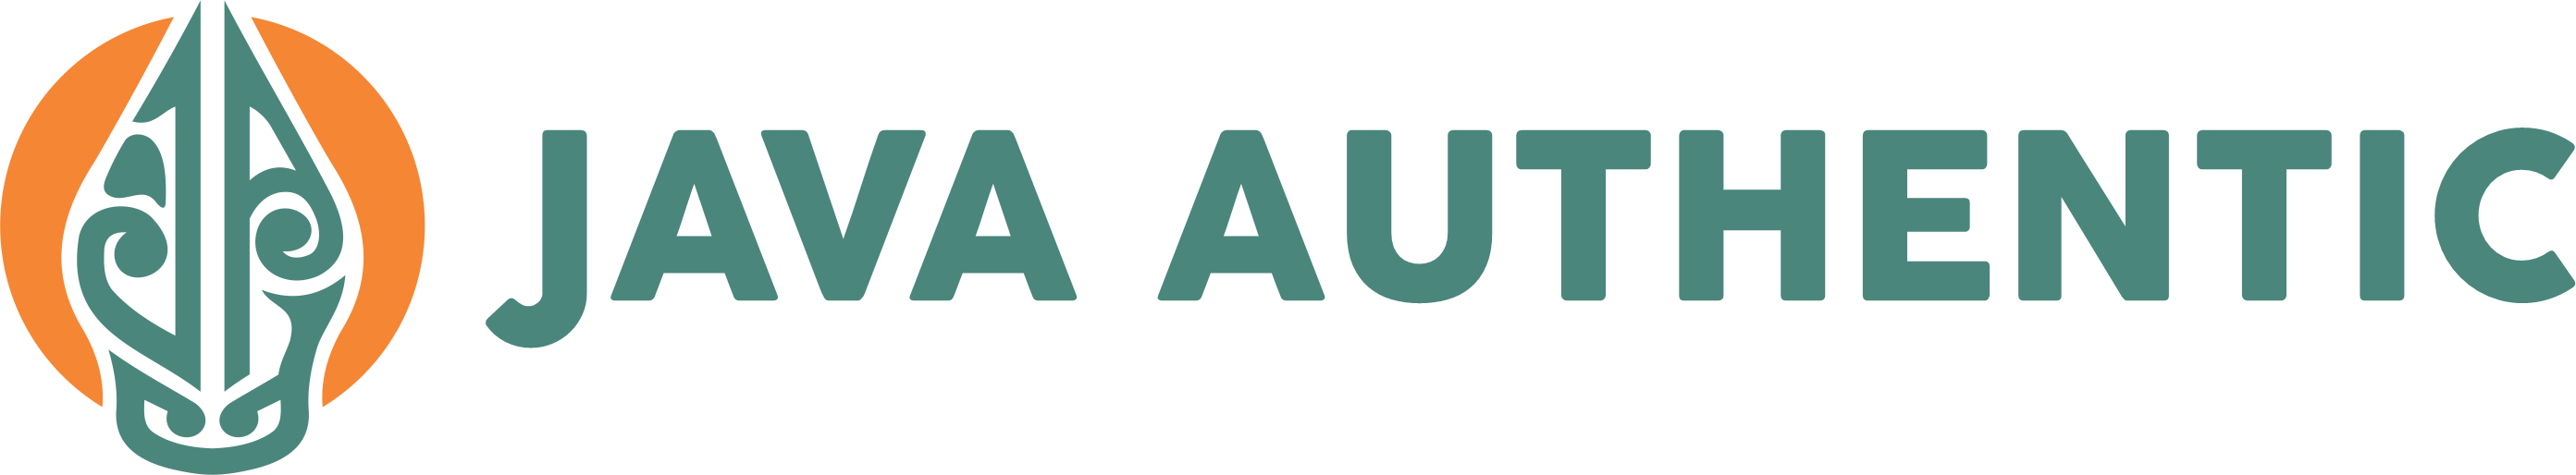 Java-Authentic-Logo